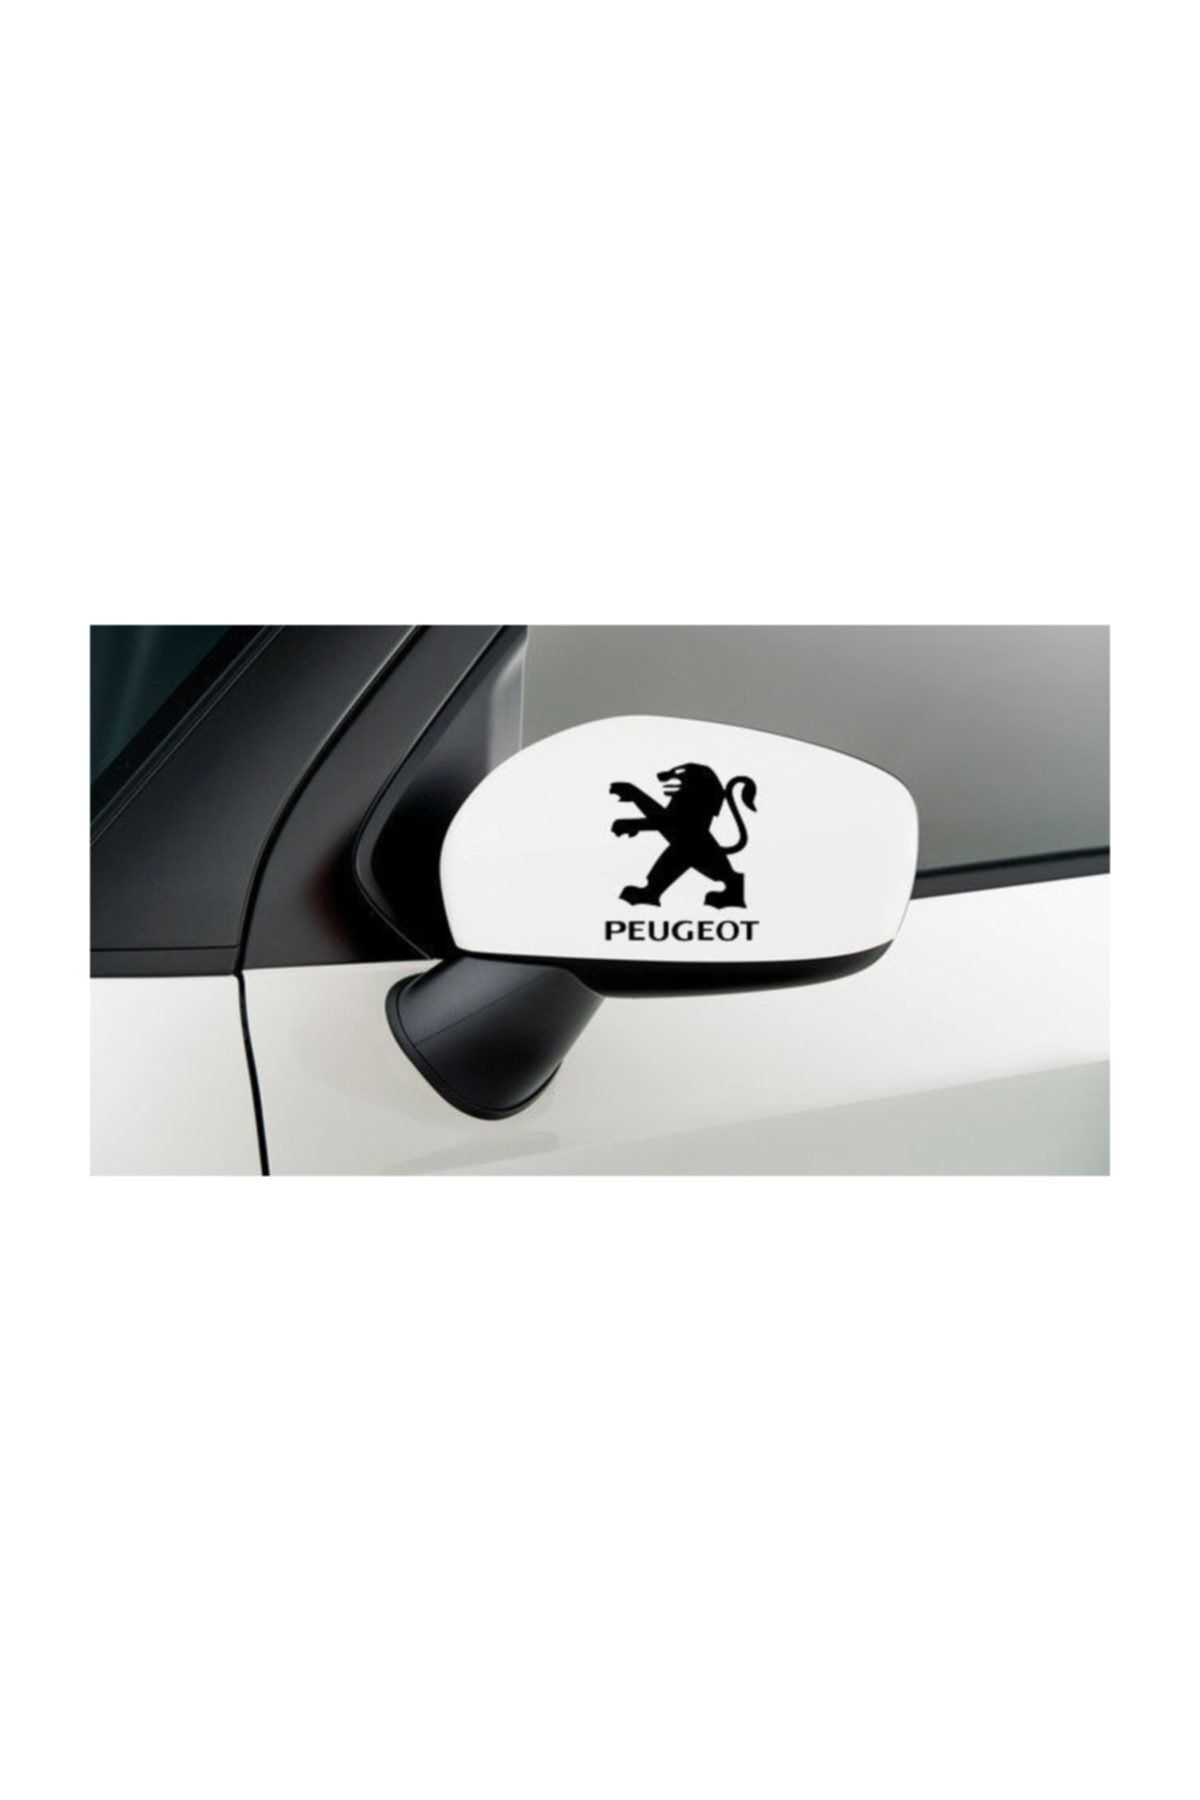 TSC Peugeot Oto Araba Yan Aynalar Için 2 Adet Sticker Set